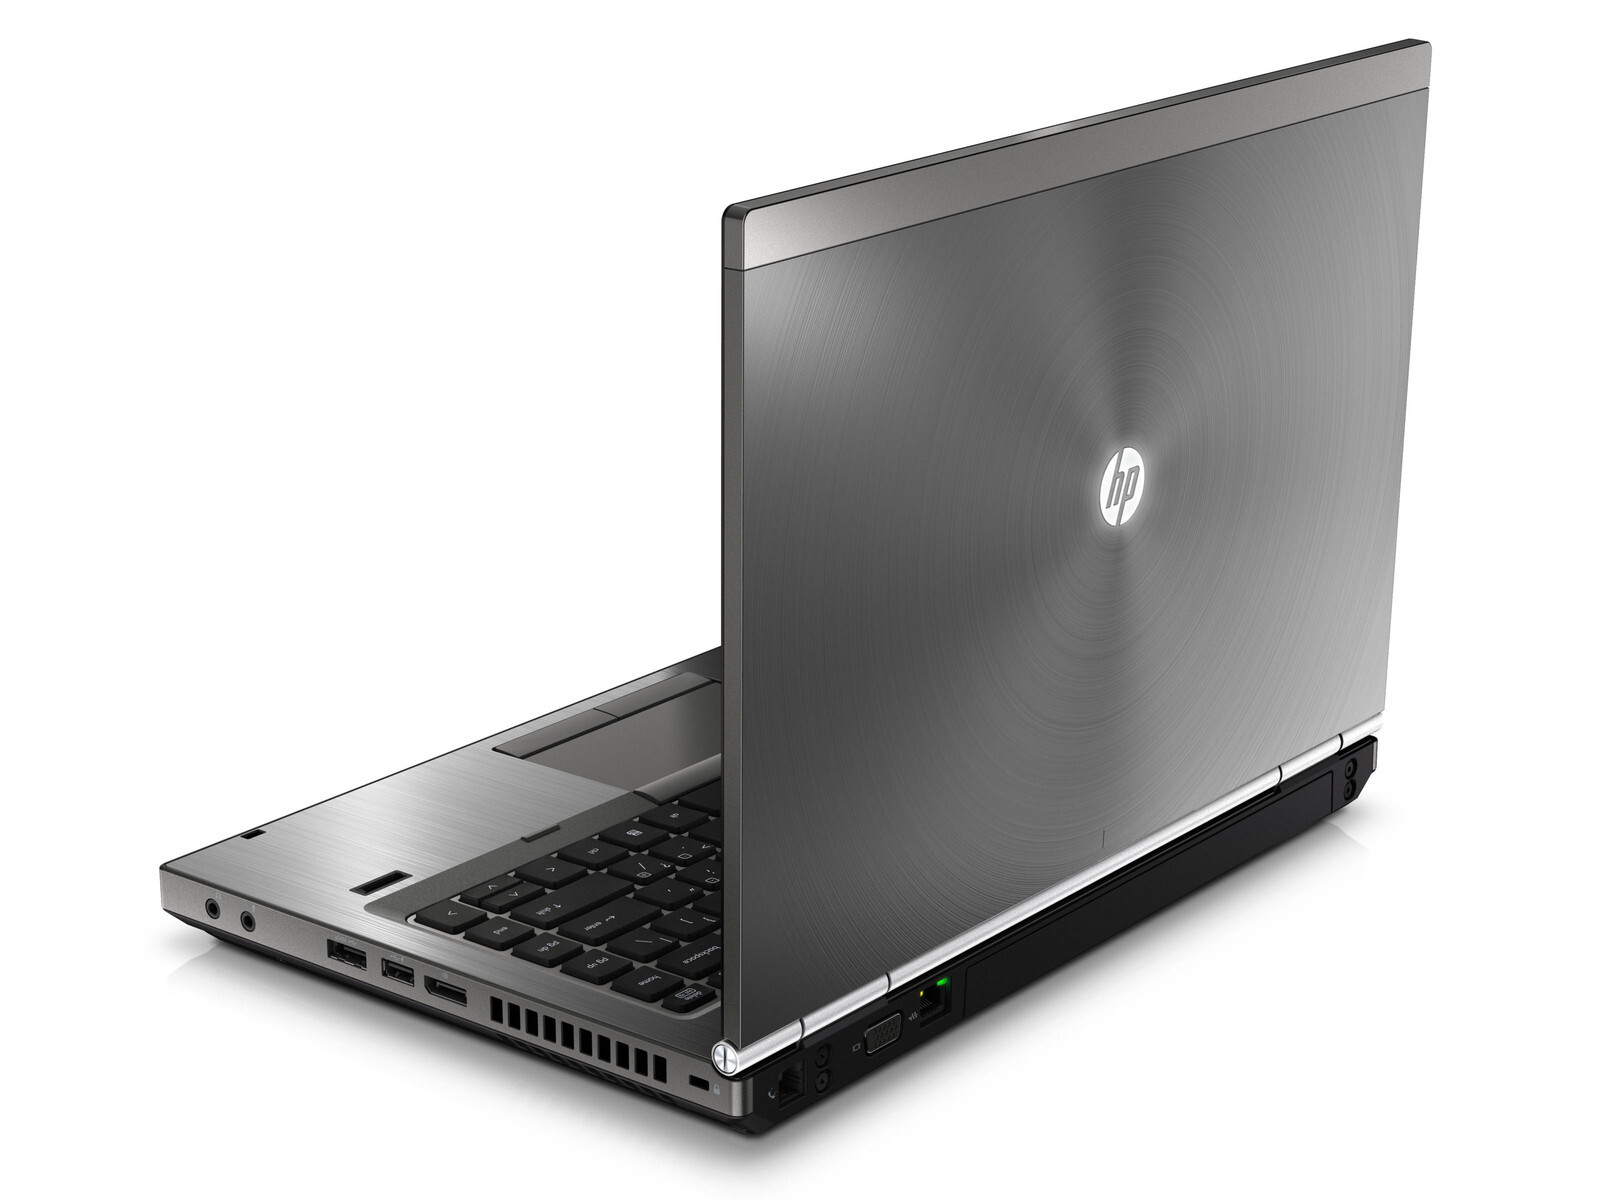 Laptop HP Elitebook 8460P - Intel Core i7-2620M 2.7GHz, 4GB RAM, 320GB HDD, AMD Radeon HD 6470M, 14.0 inch